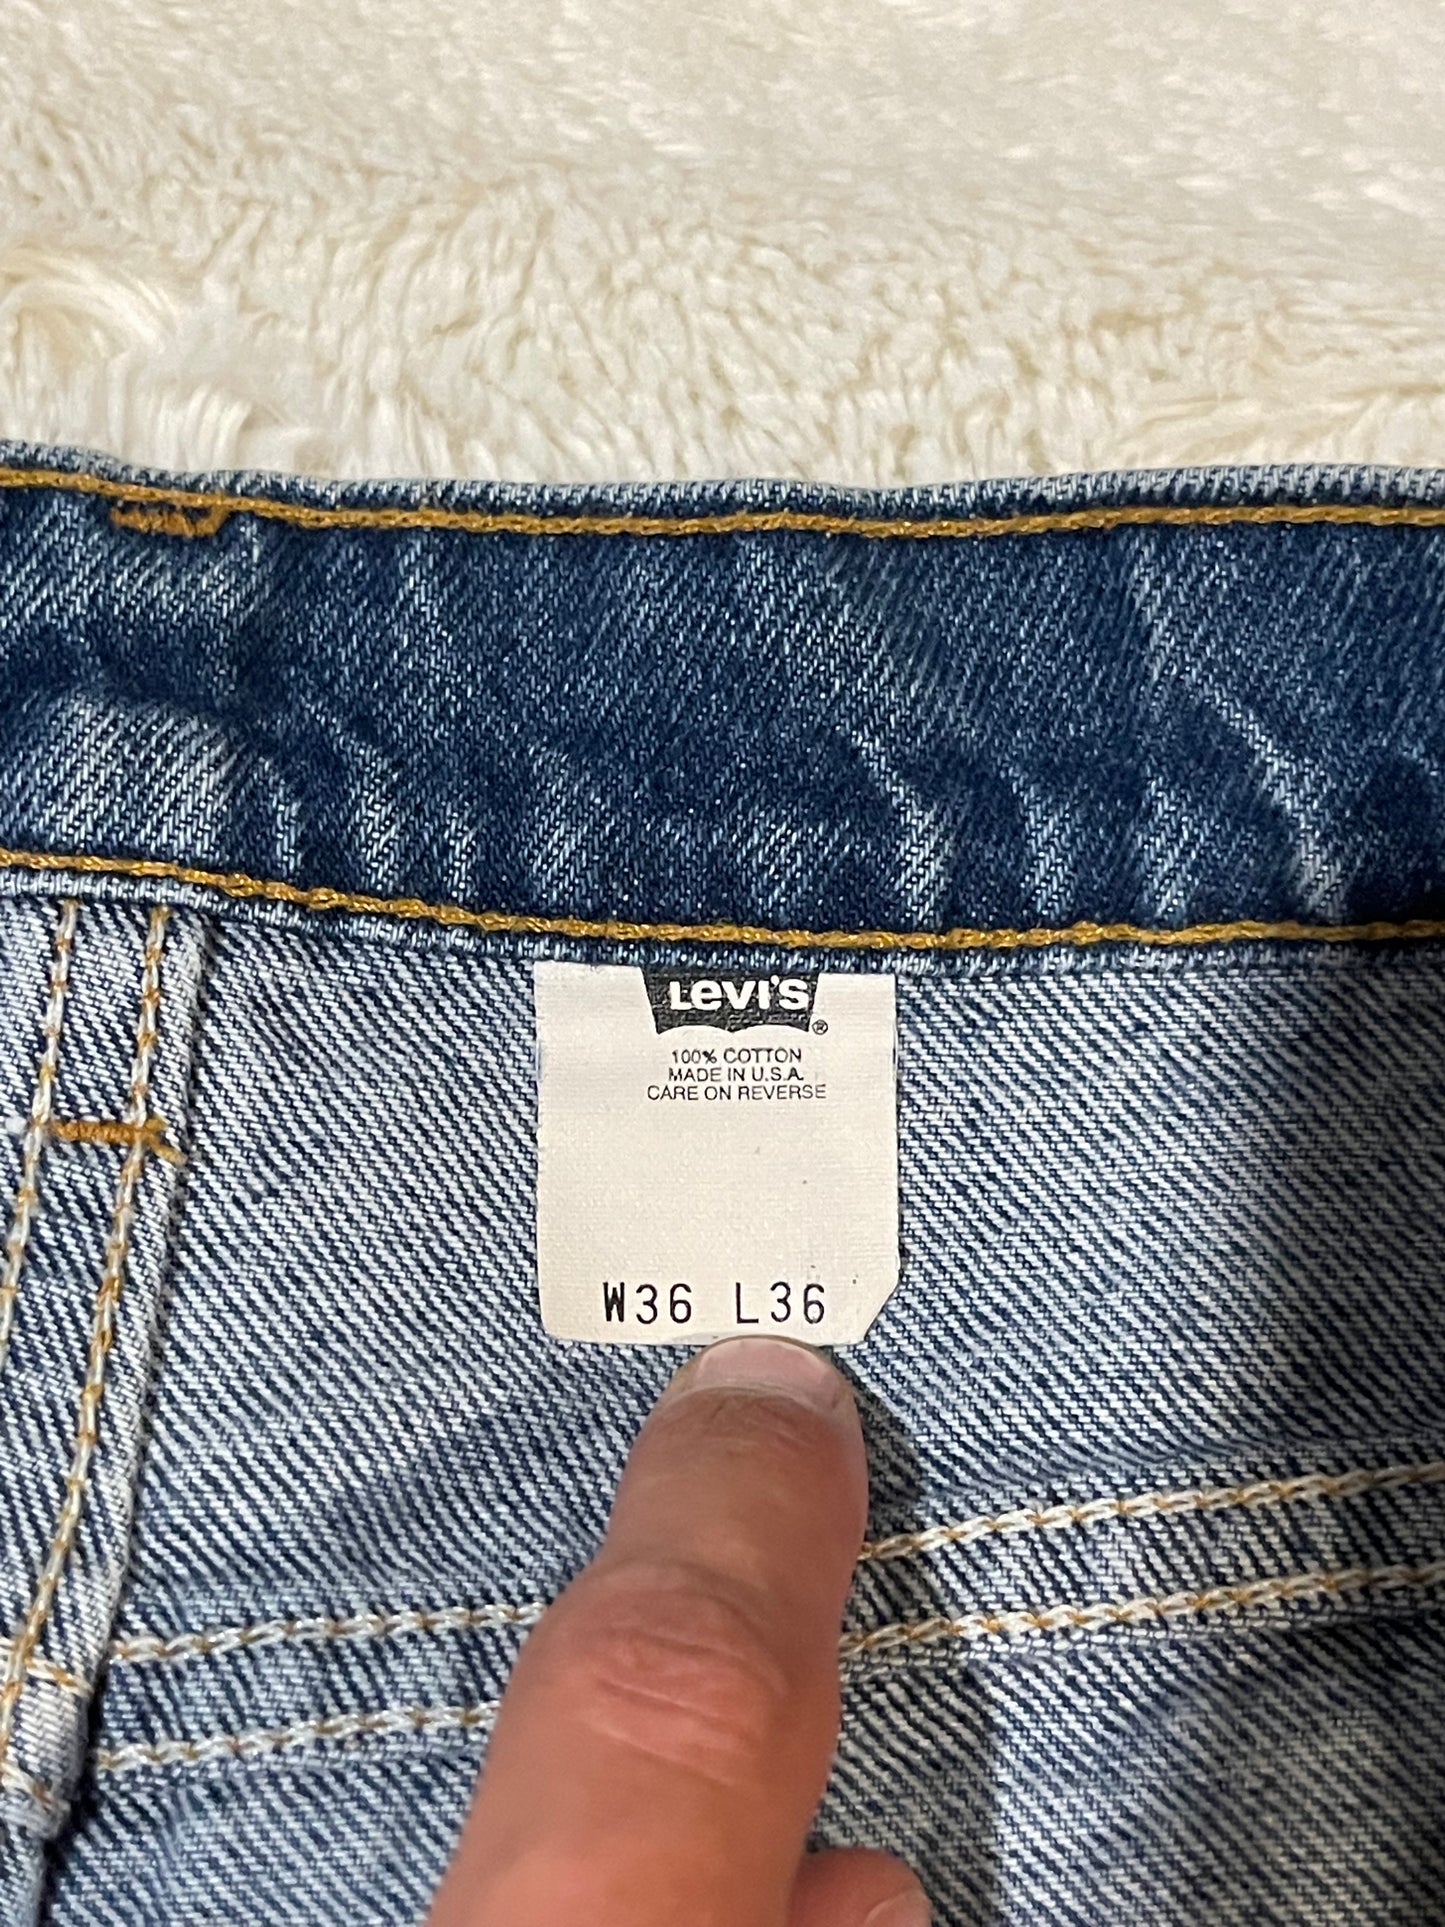 90s Levis ‘Orange Tab’ Bootcut Jeans (36x36)